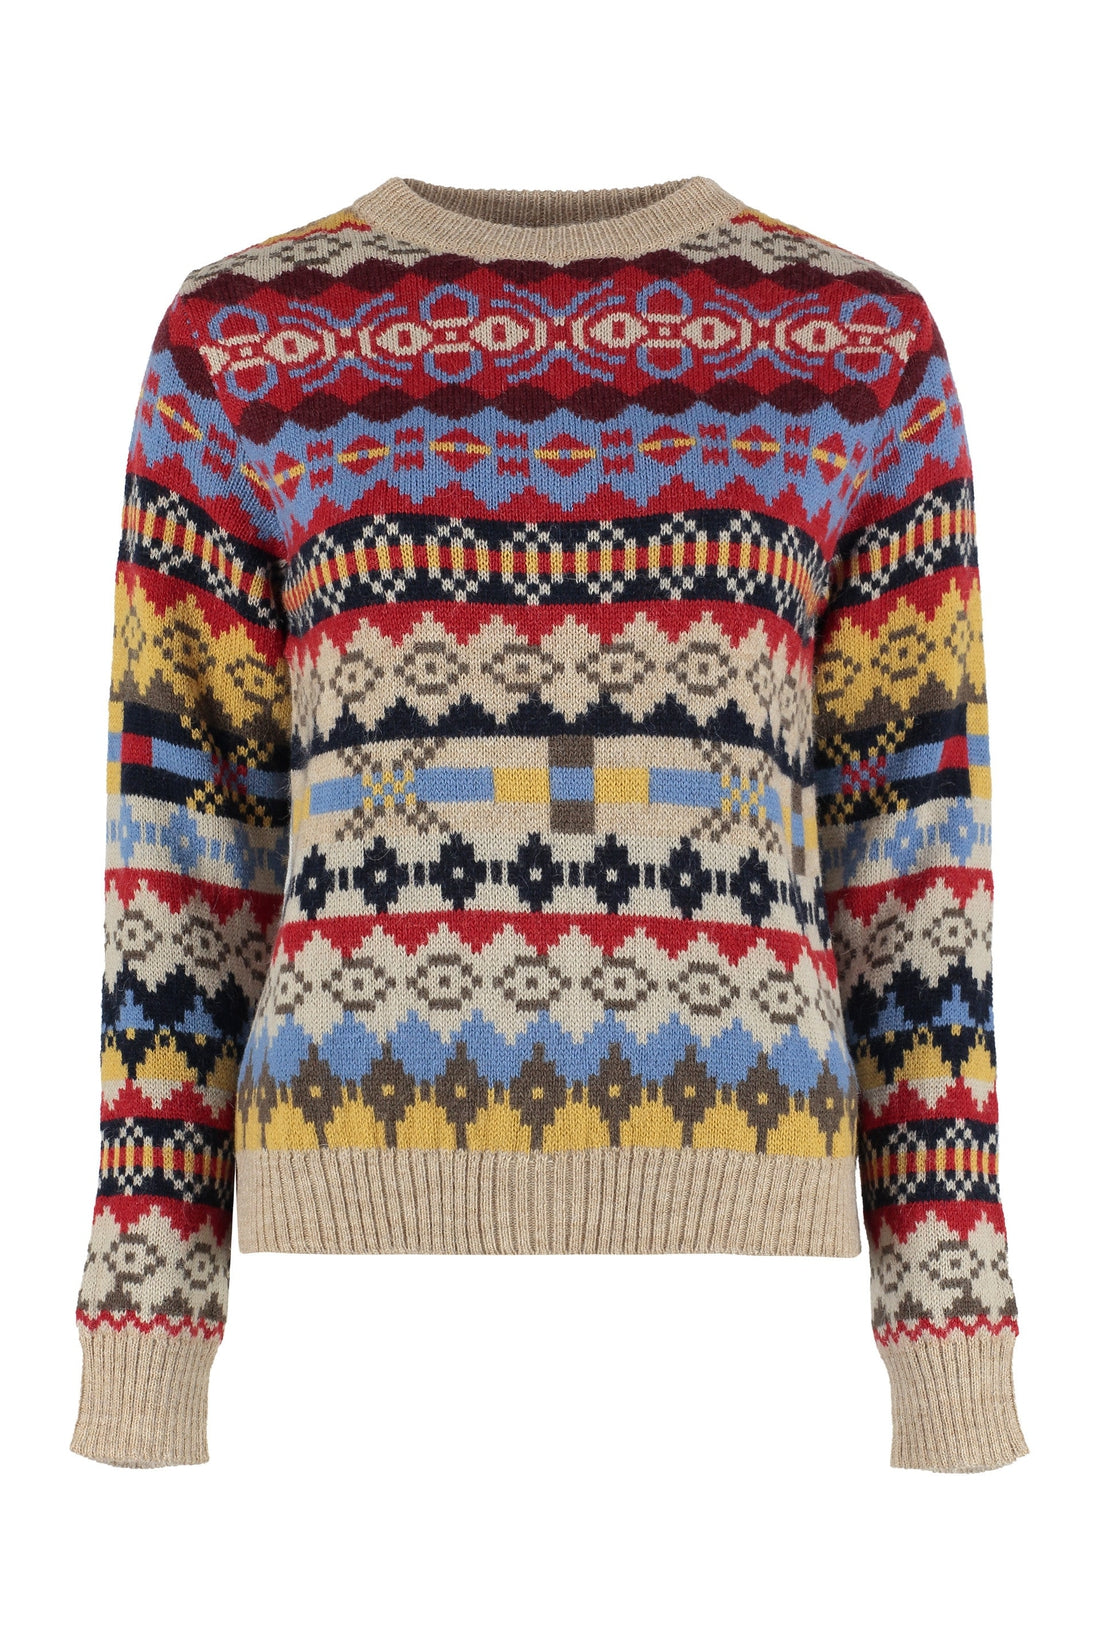 Weekend Max Mara-OUTLET-SALE-Rotondo jacquard sweater-ARCHIVIST